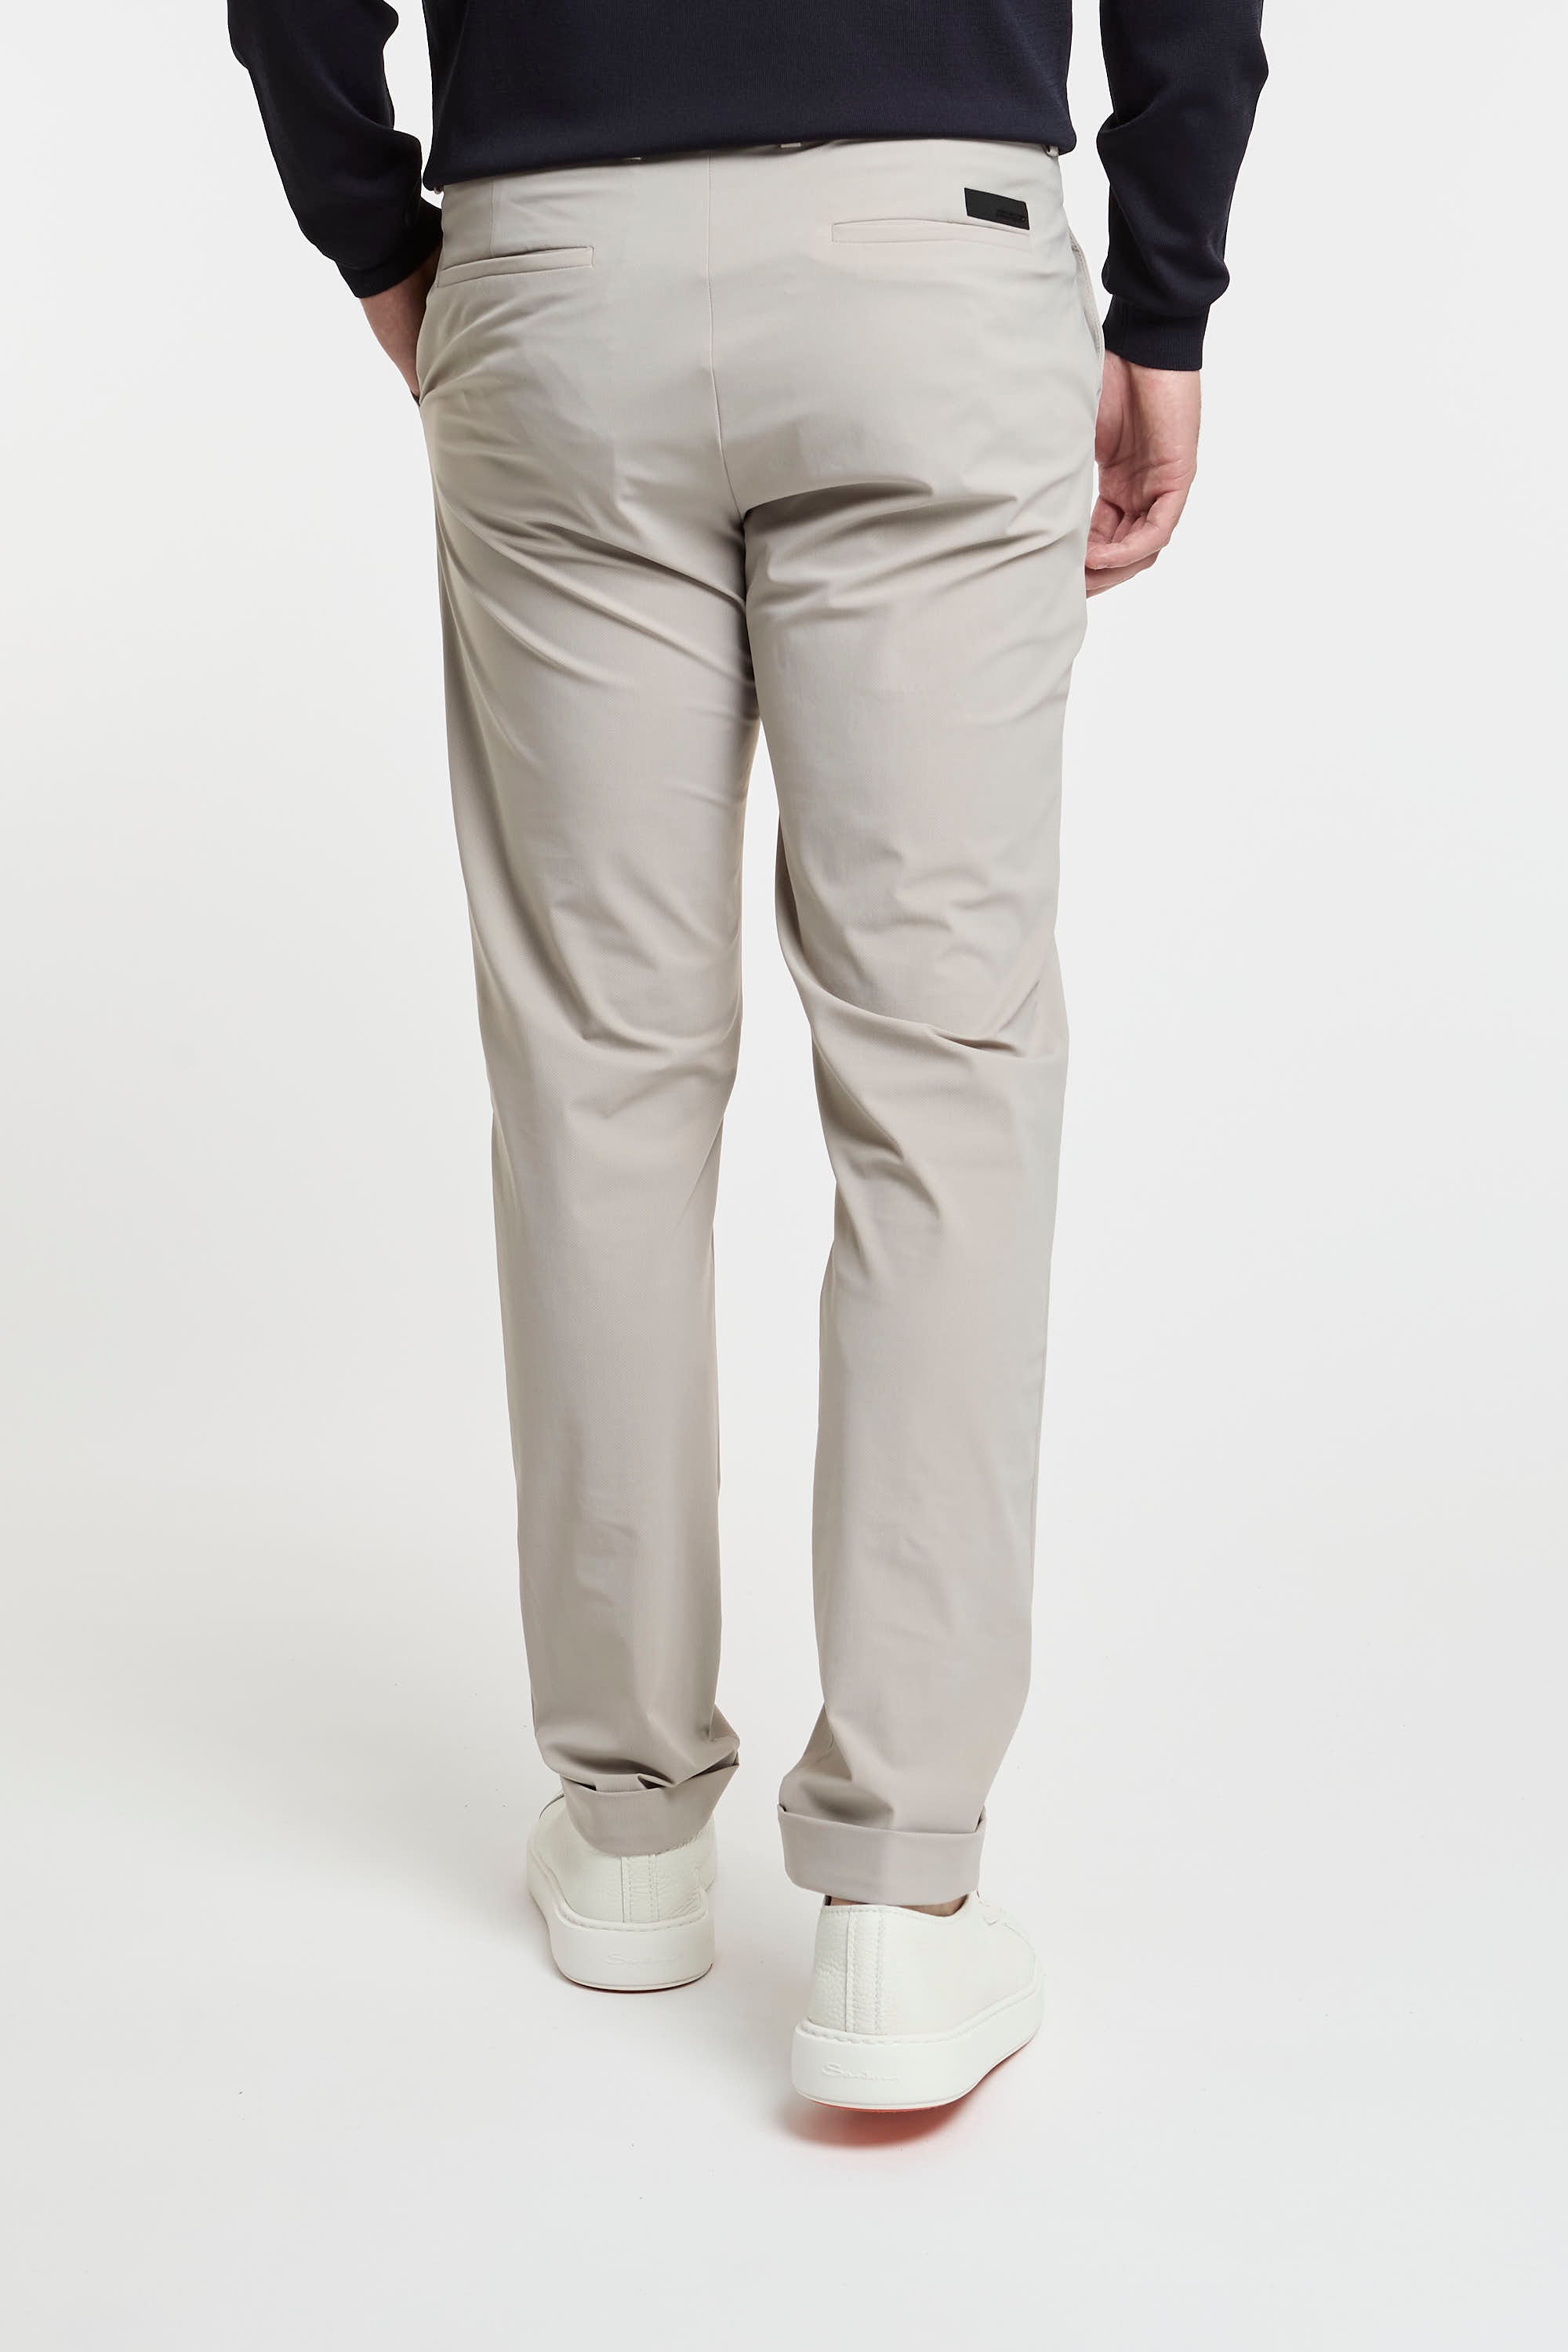 Pantalone Micro Chino-5